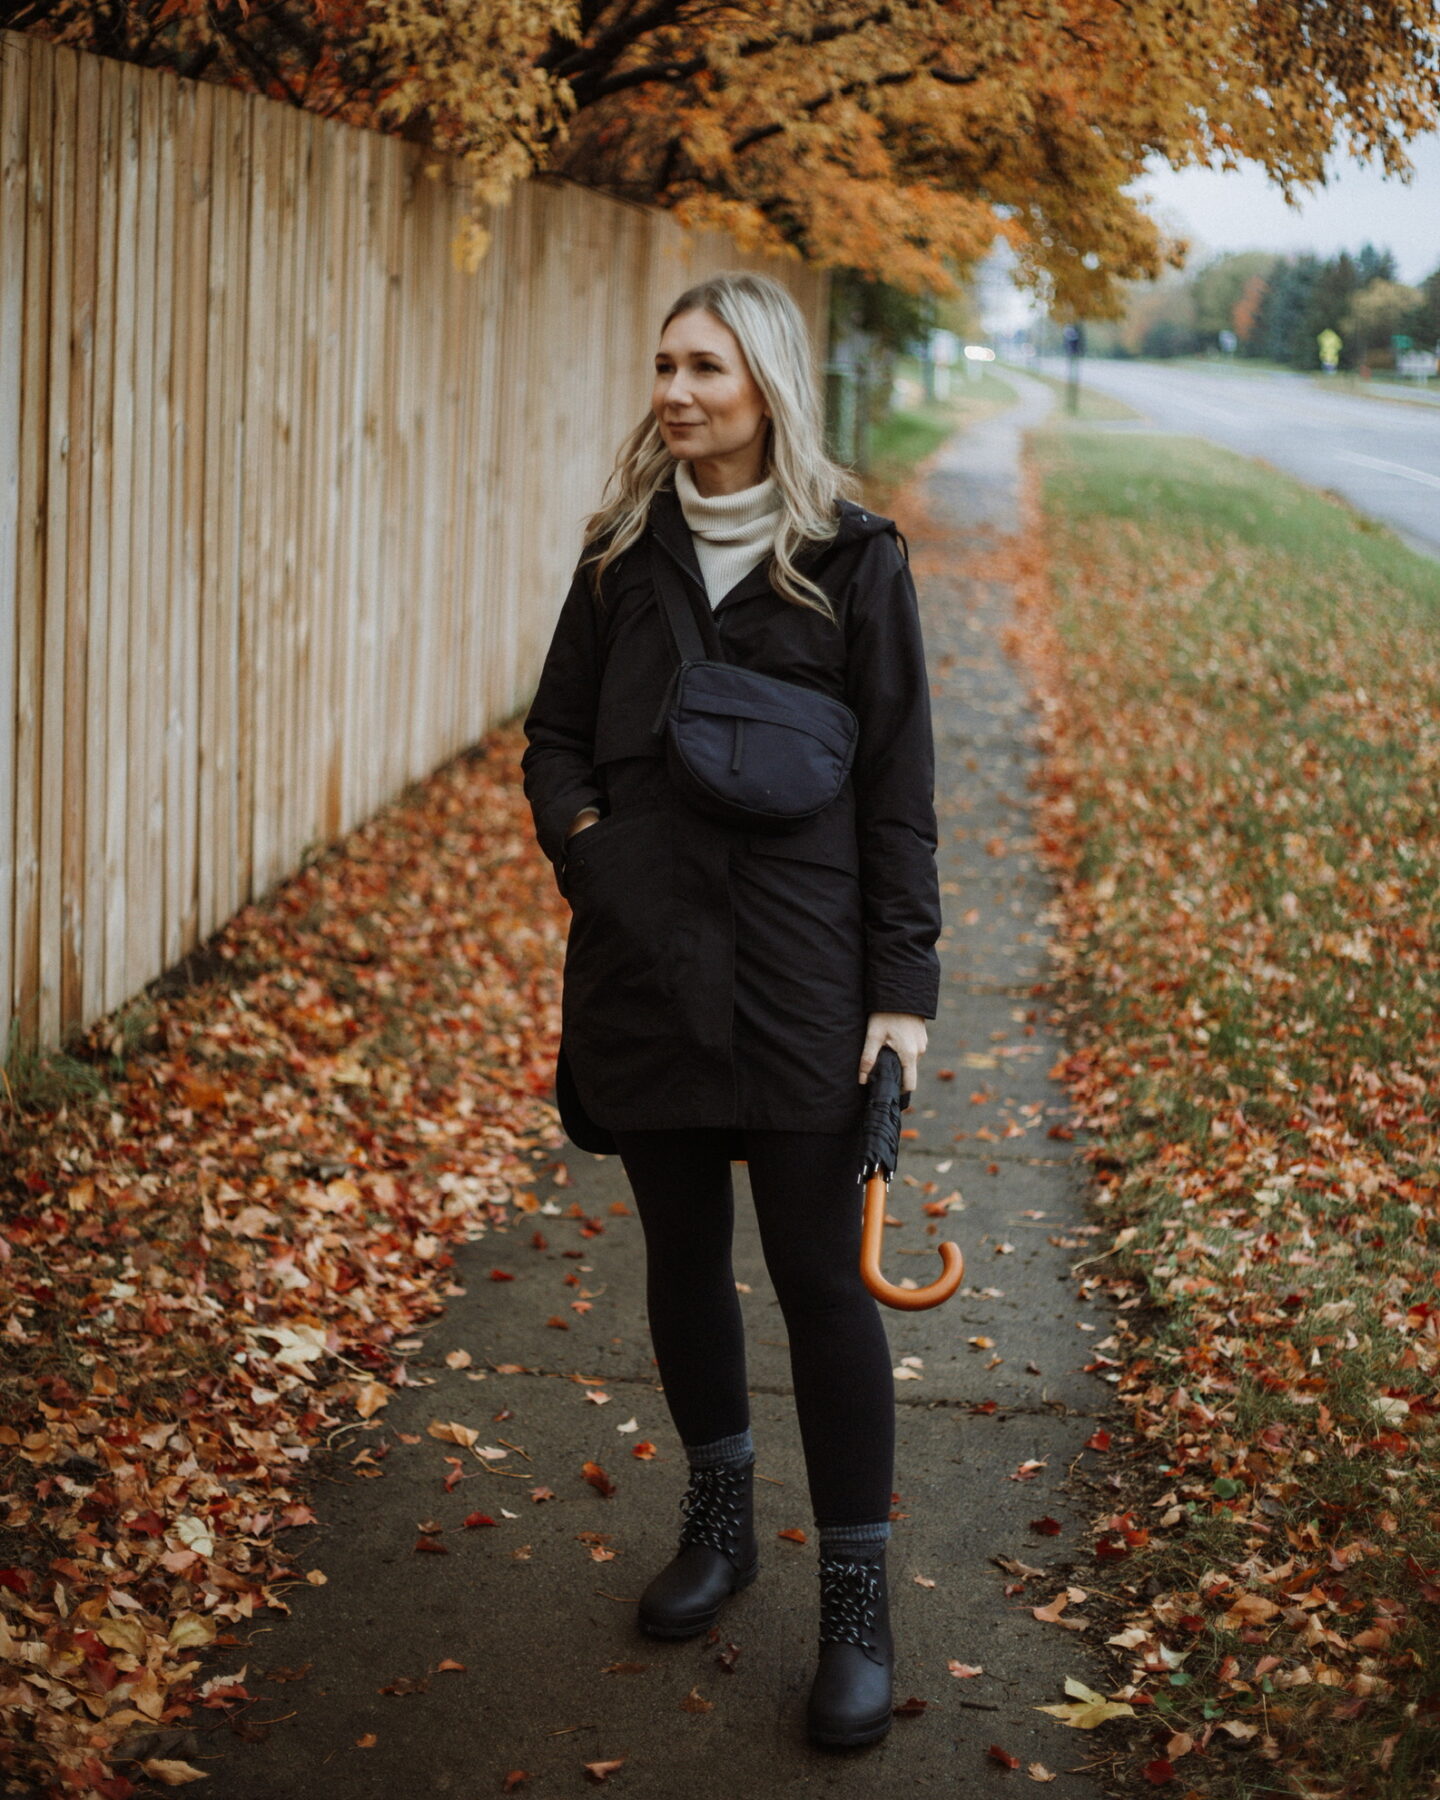 Karin Emily wears a black rain coat, black leggings, and black rain boots